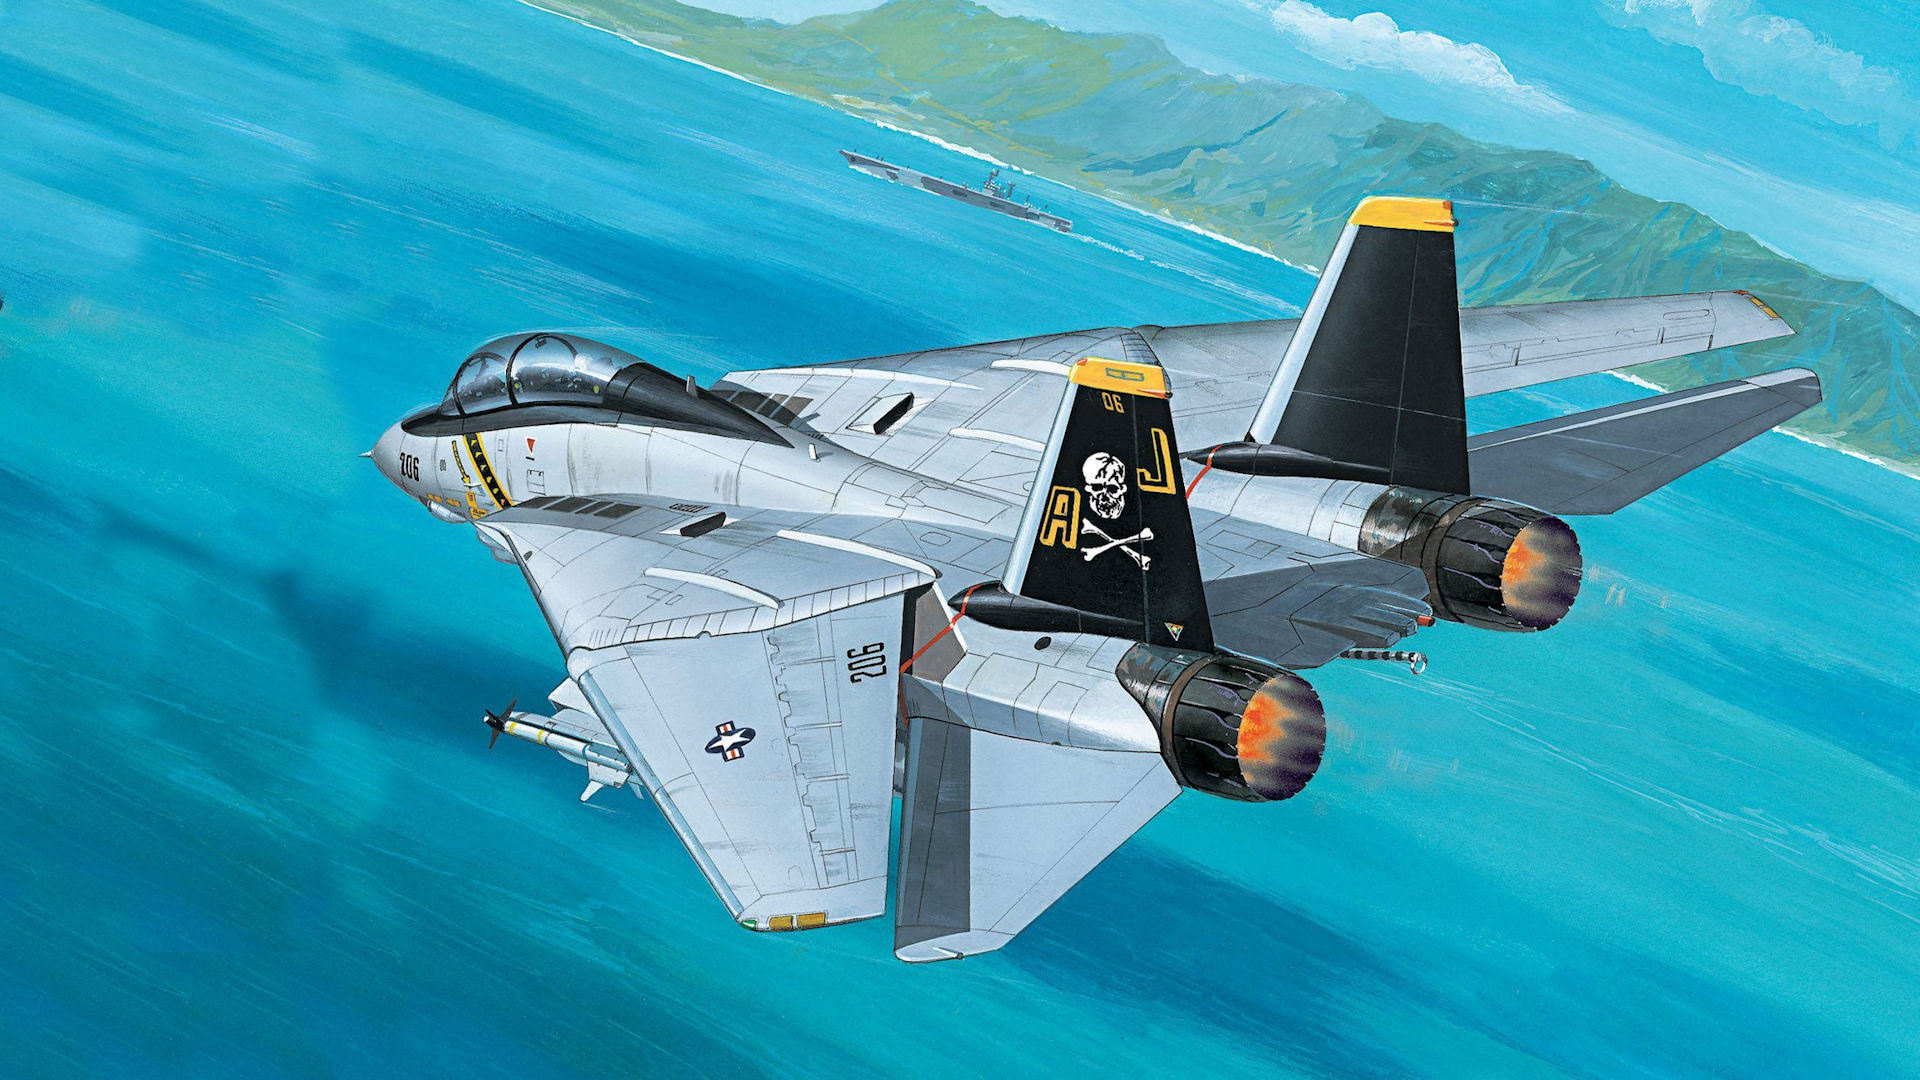 F Art Artistic Paintings Print Military Wings Jet